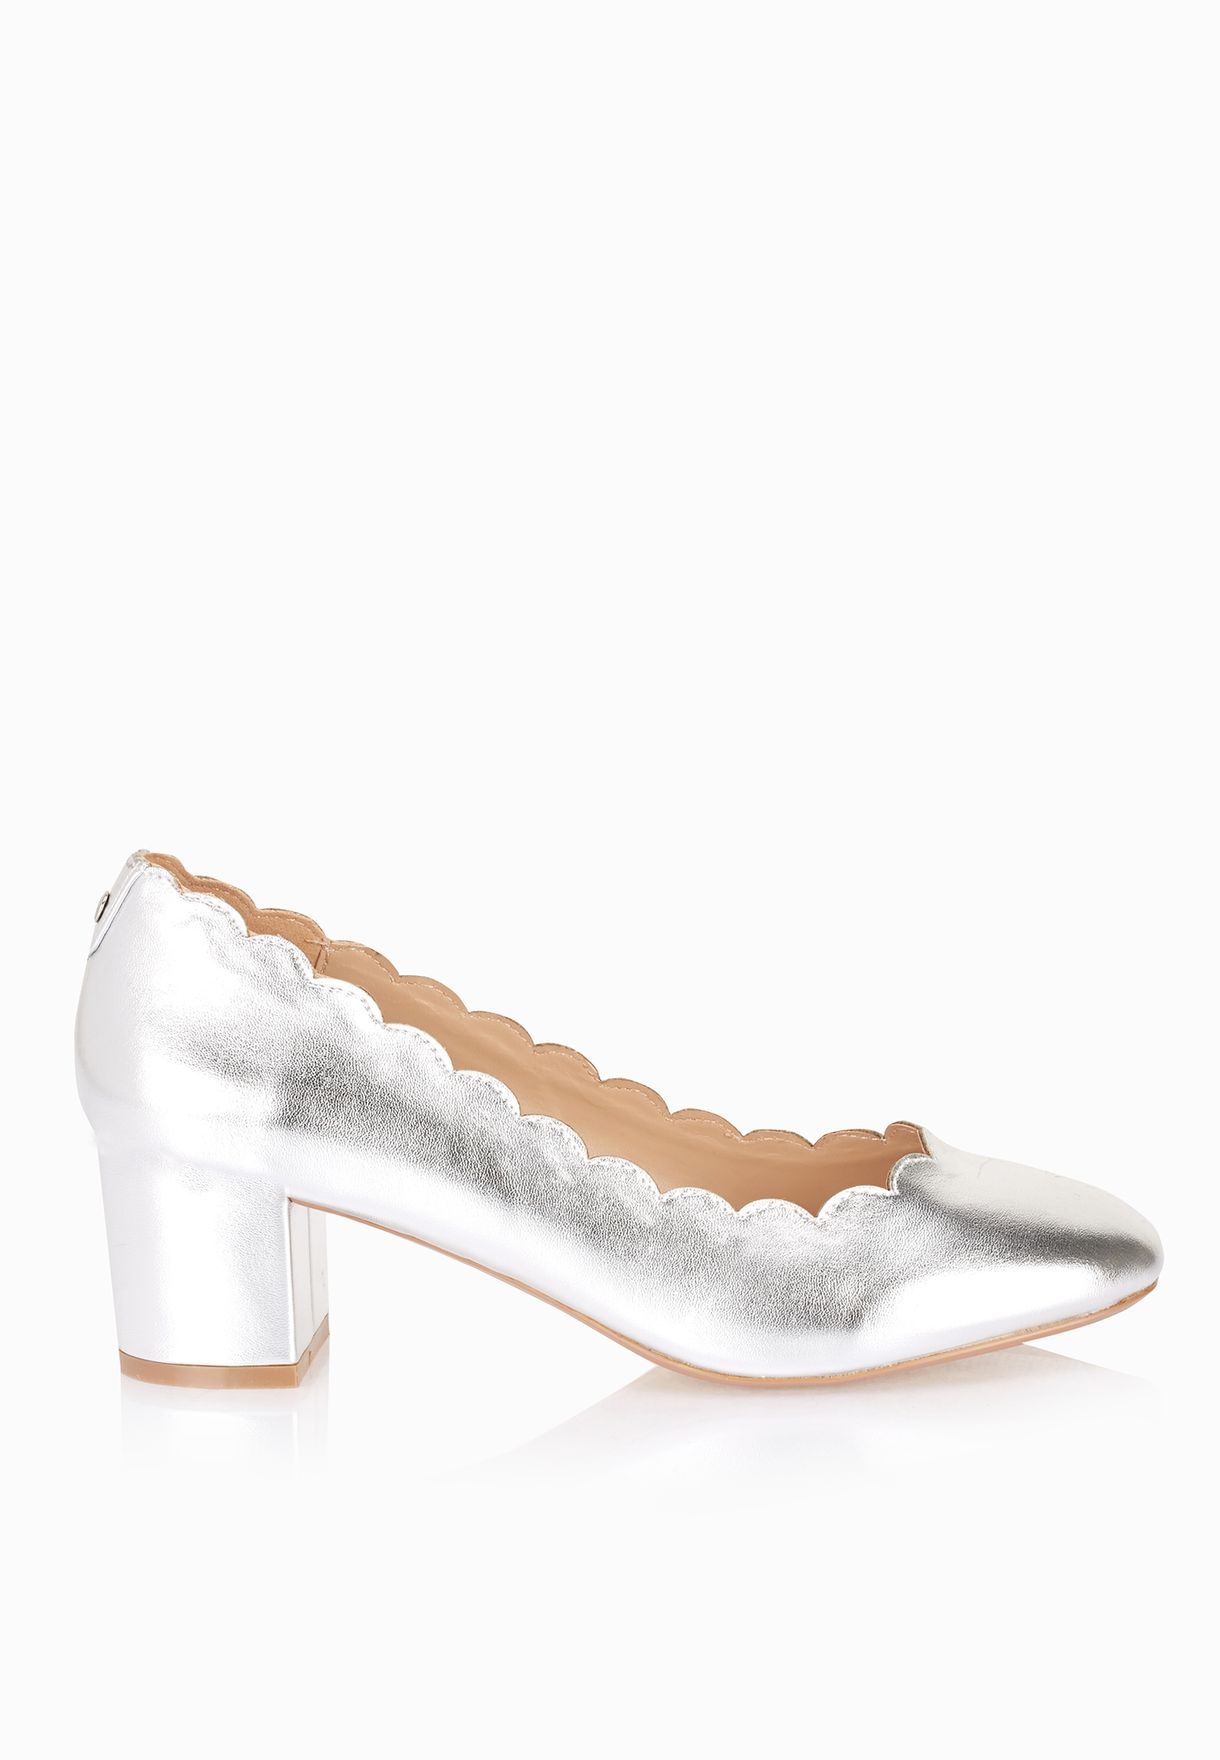 dorothy perkins silver heels